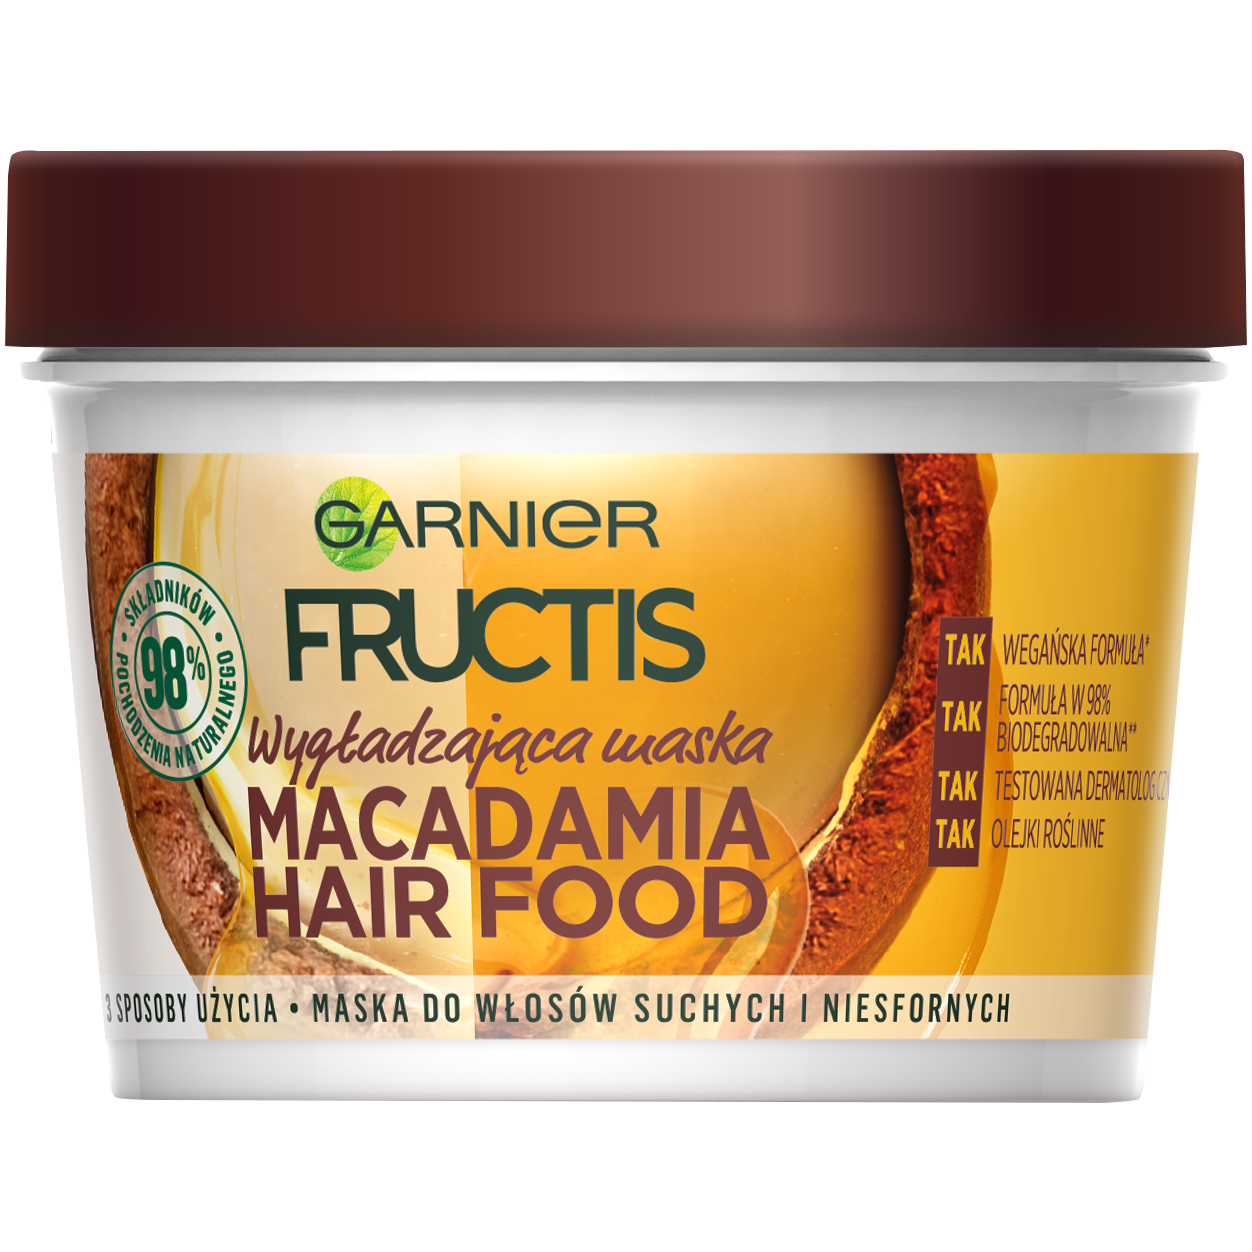 Garnier Fructis Macadamia Hair Food maska do włosów suchych i niesfornych,  390 ml | hebe.pl